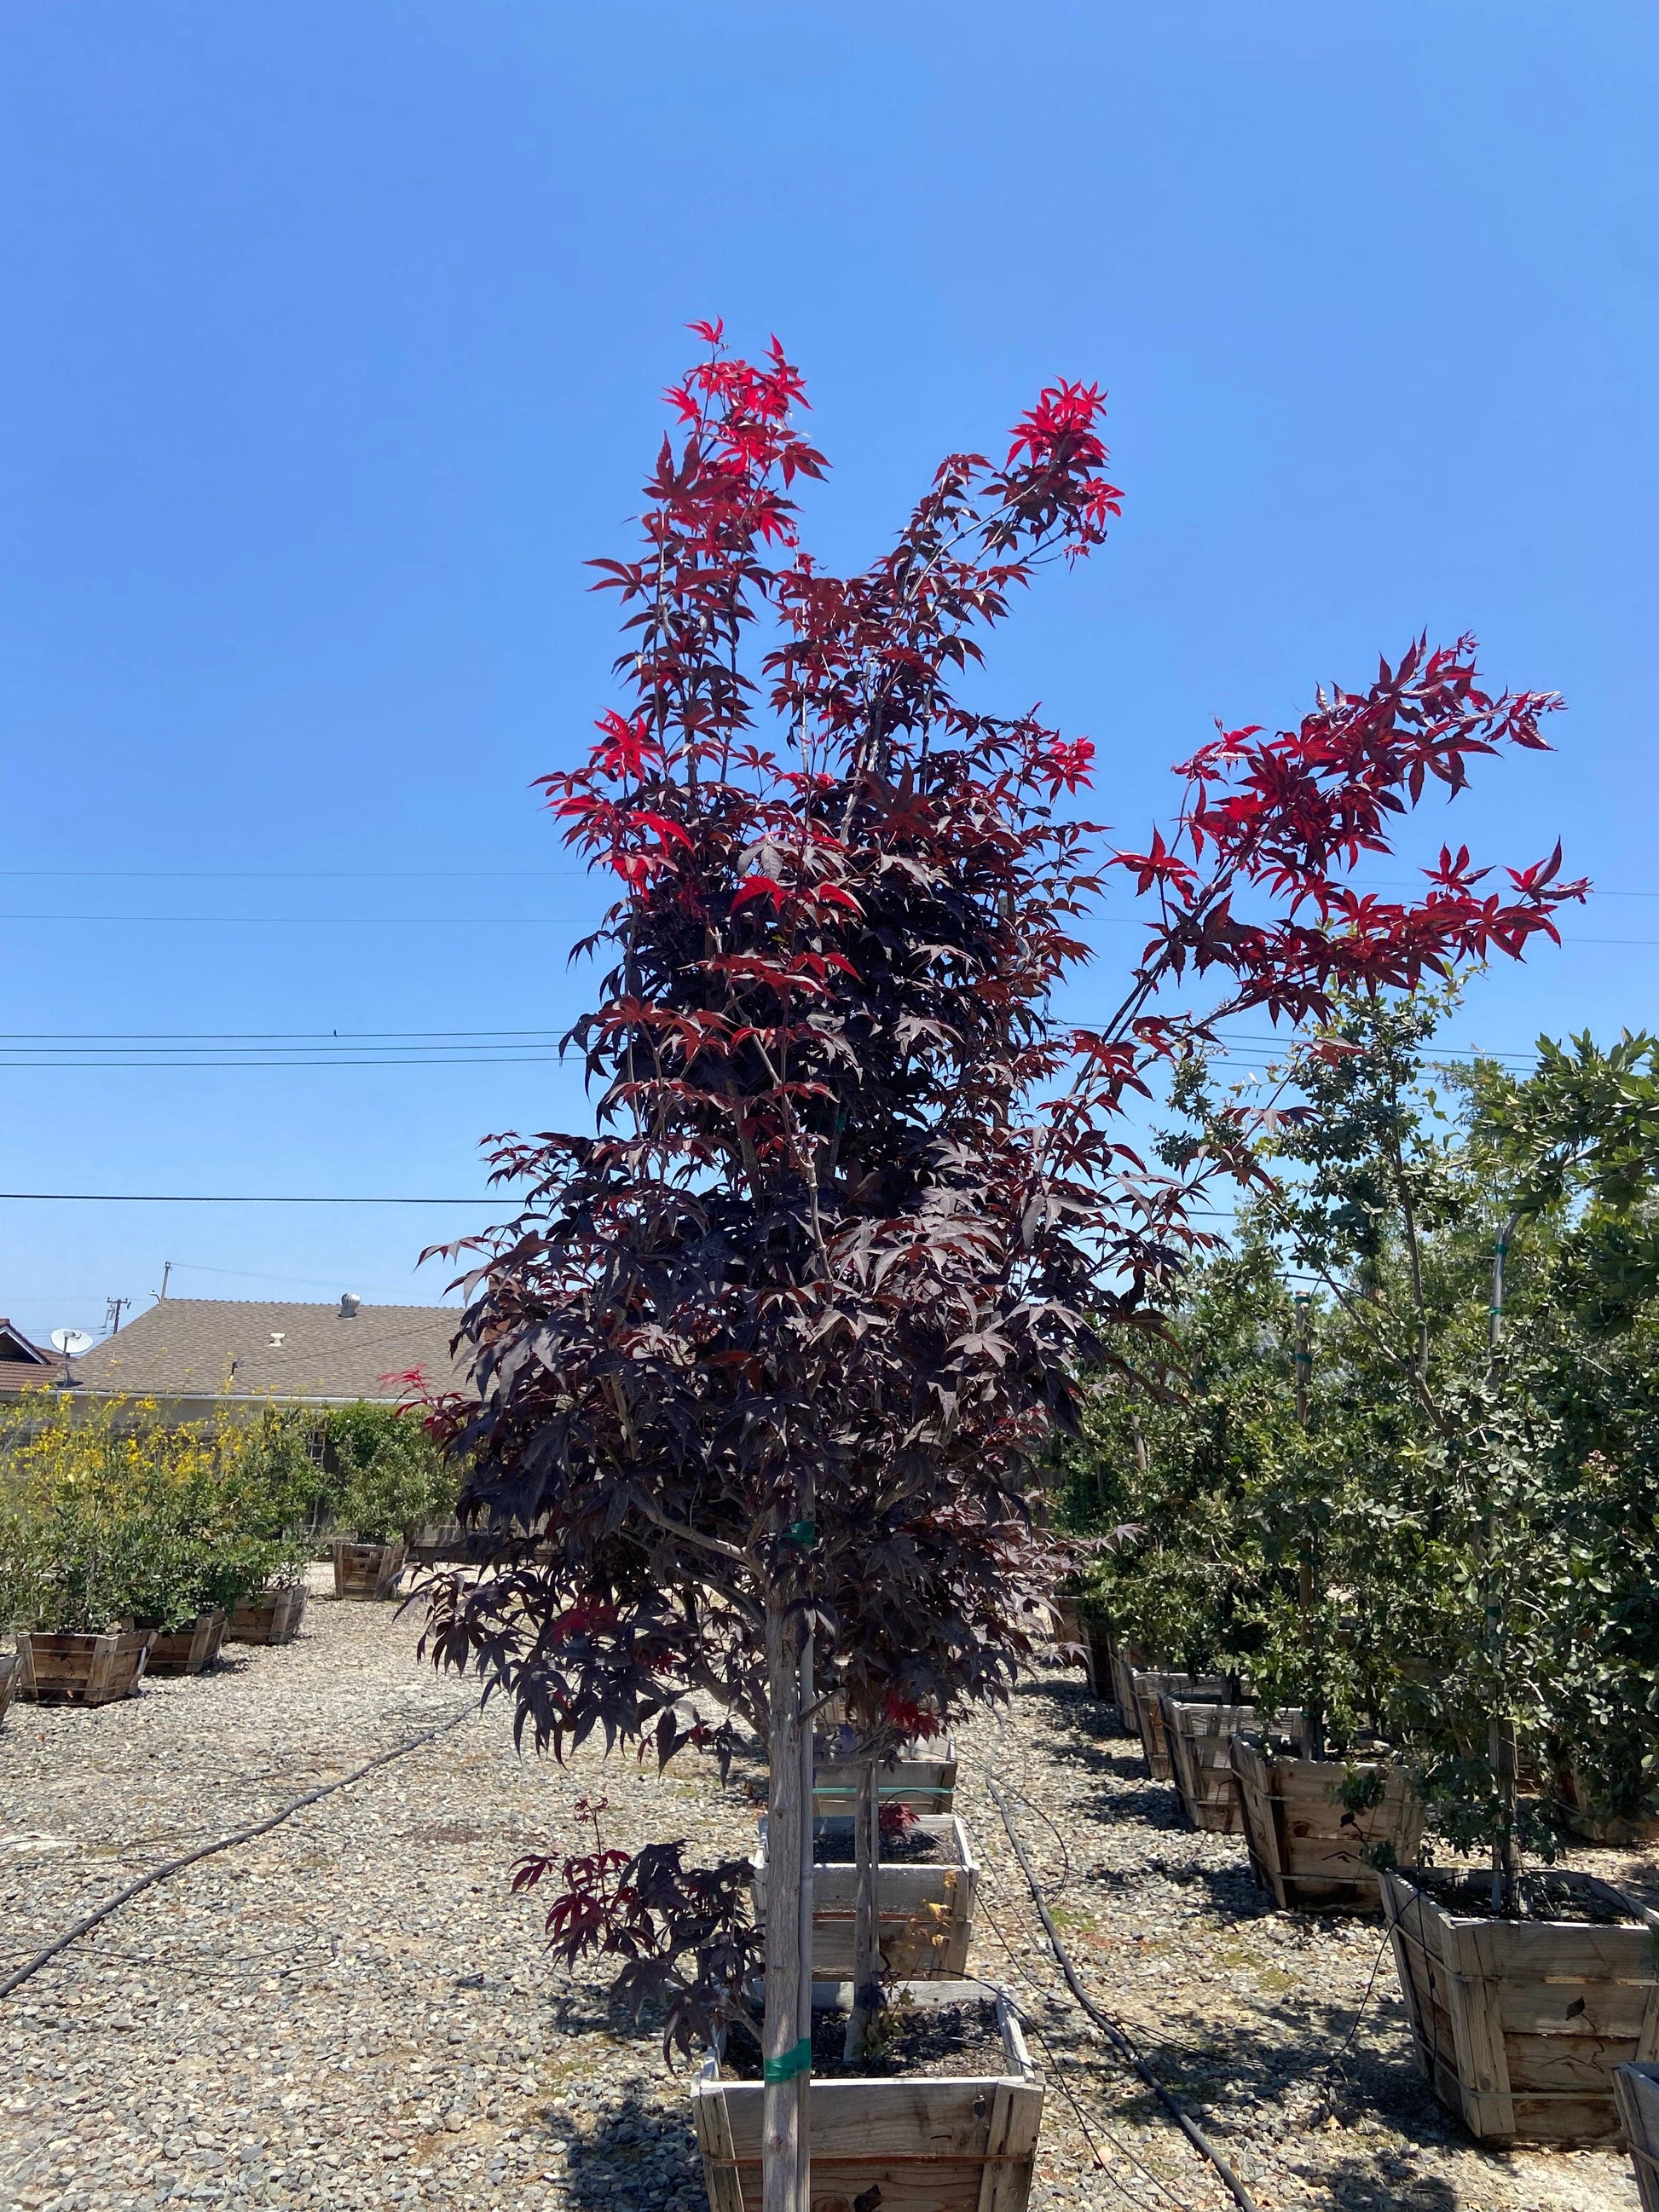 Acer palmatum 'Bloodgood' Red Japanese Maple Tree